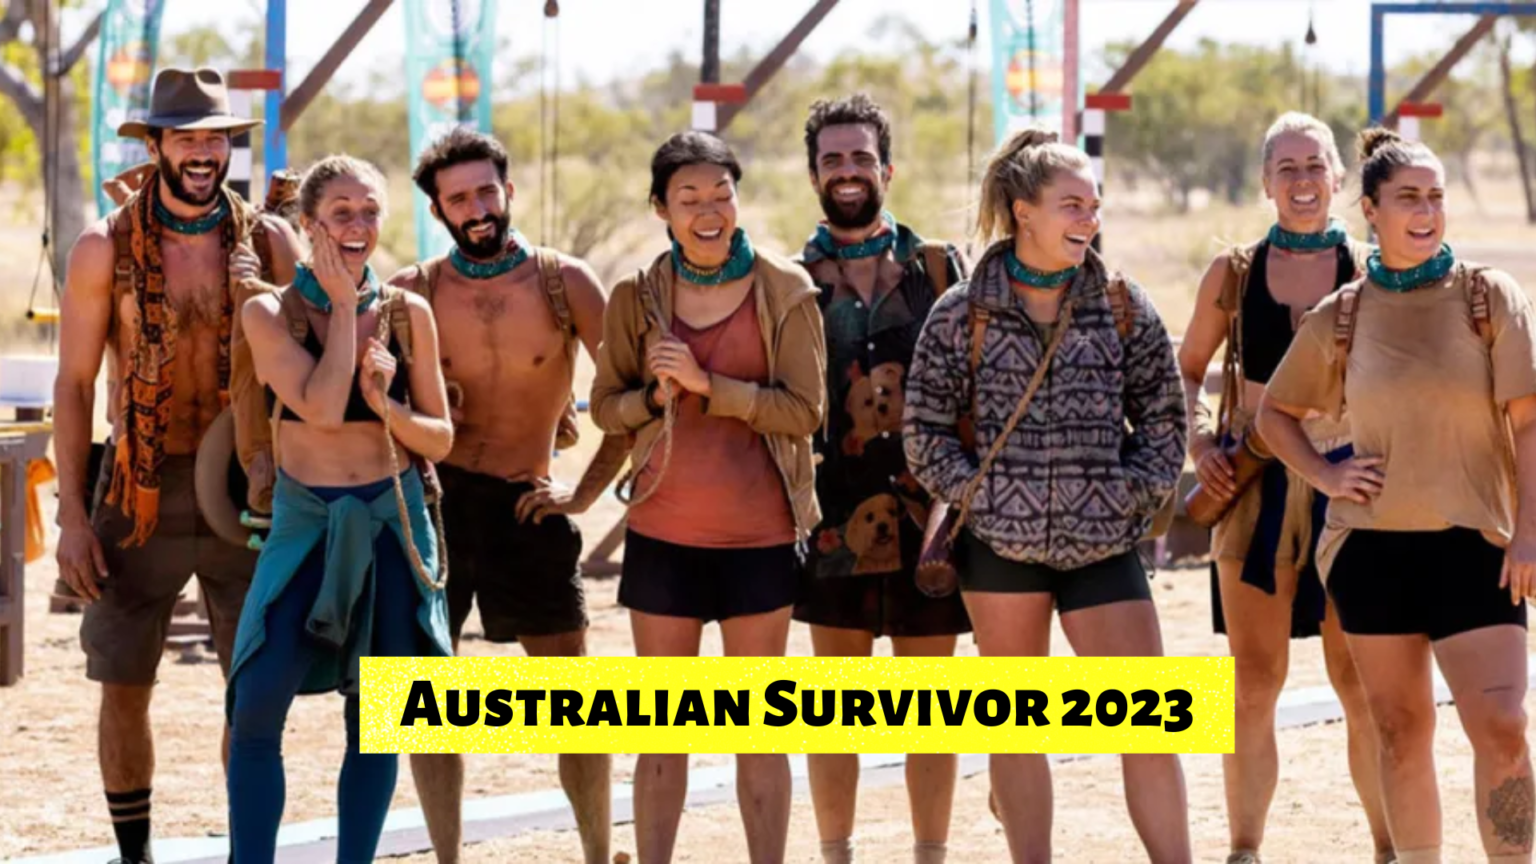 Australian Survivor 2023 1536x864 